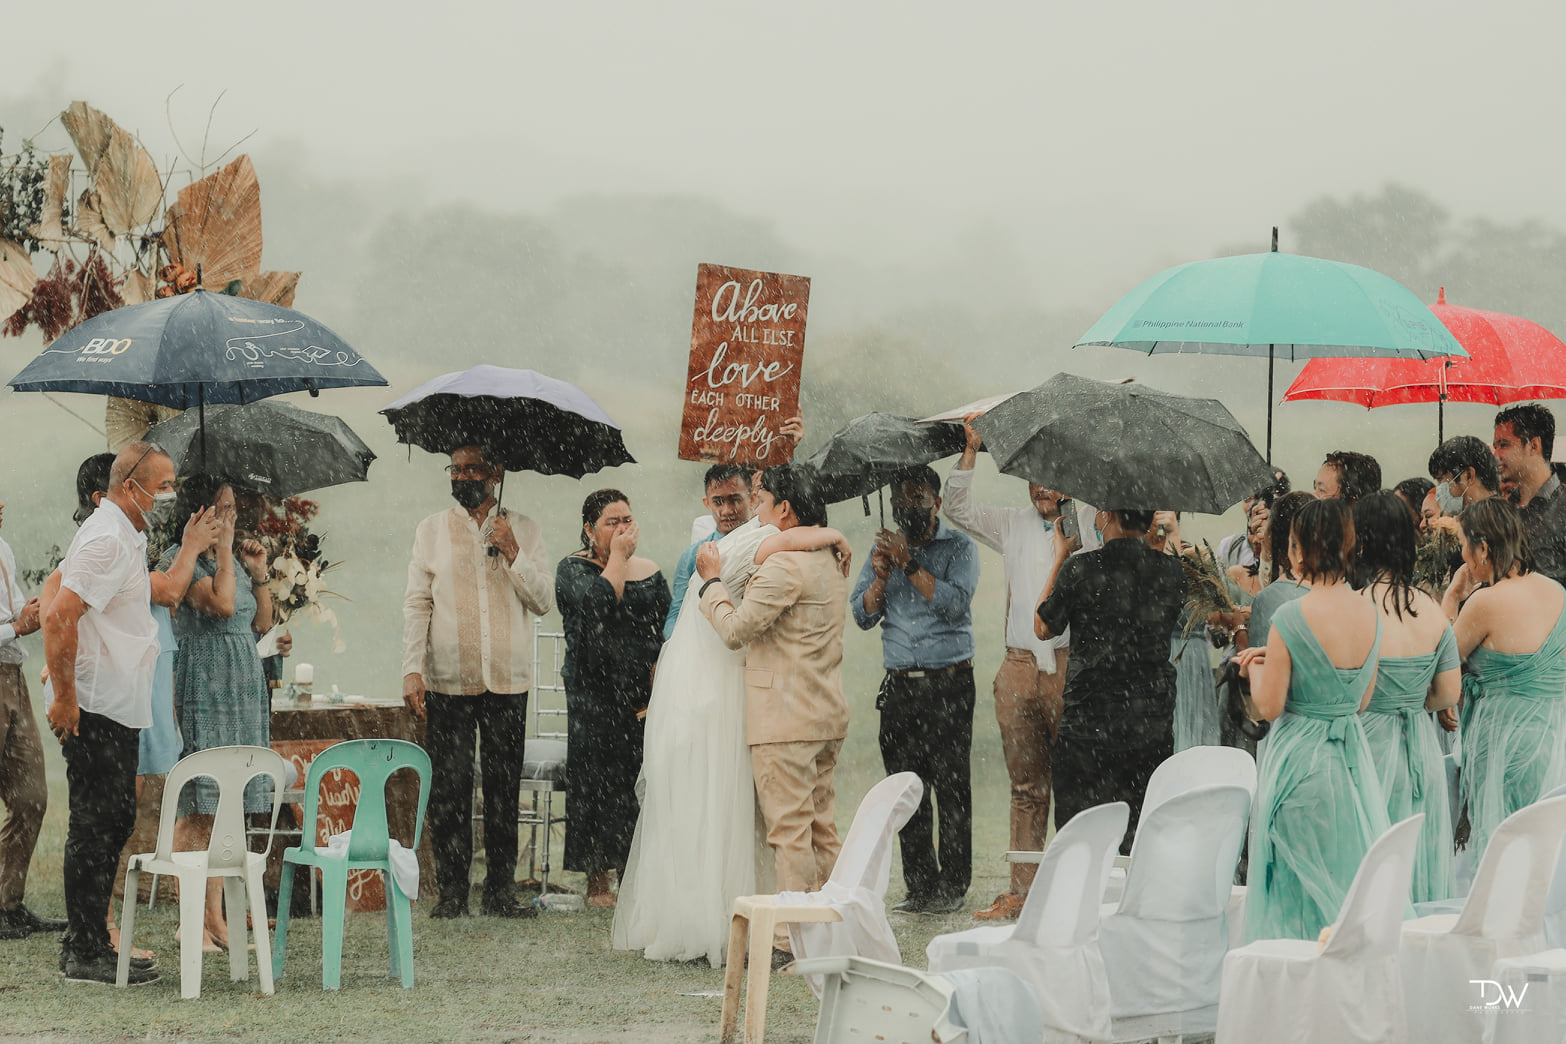 Outdoor wedding - guests stay despite the rain